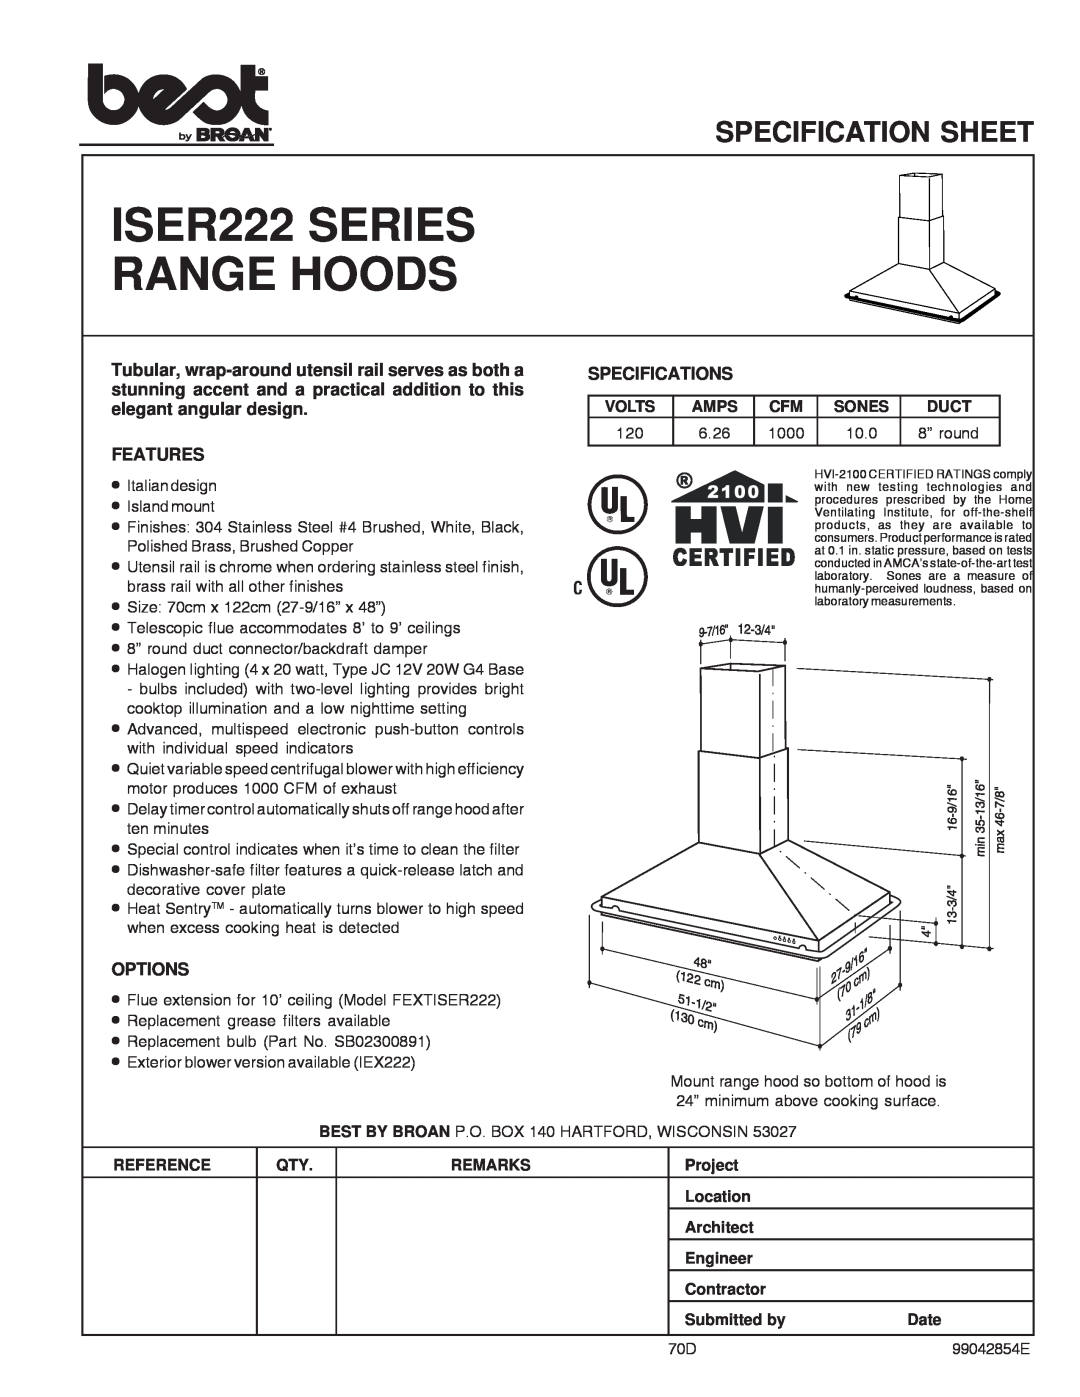 Best specifications ISER222 SERIES RANGE HOODS, Specification Sheet, Features, Specifications, Options 